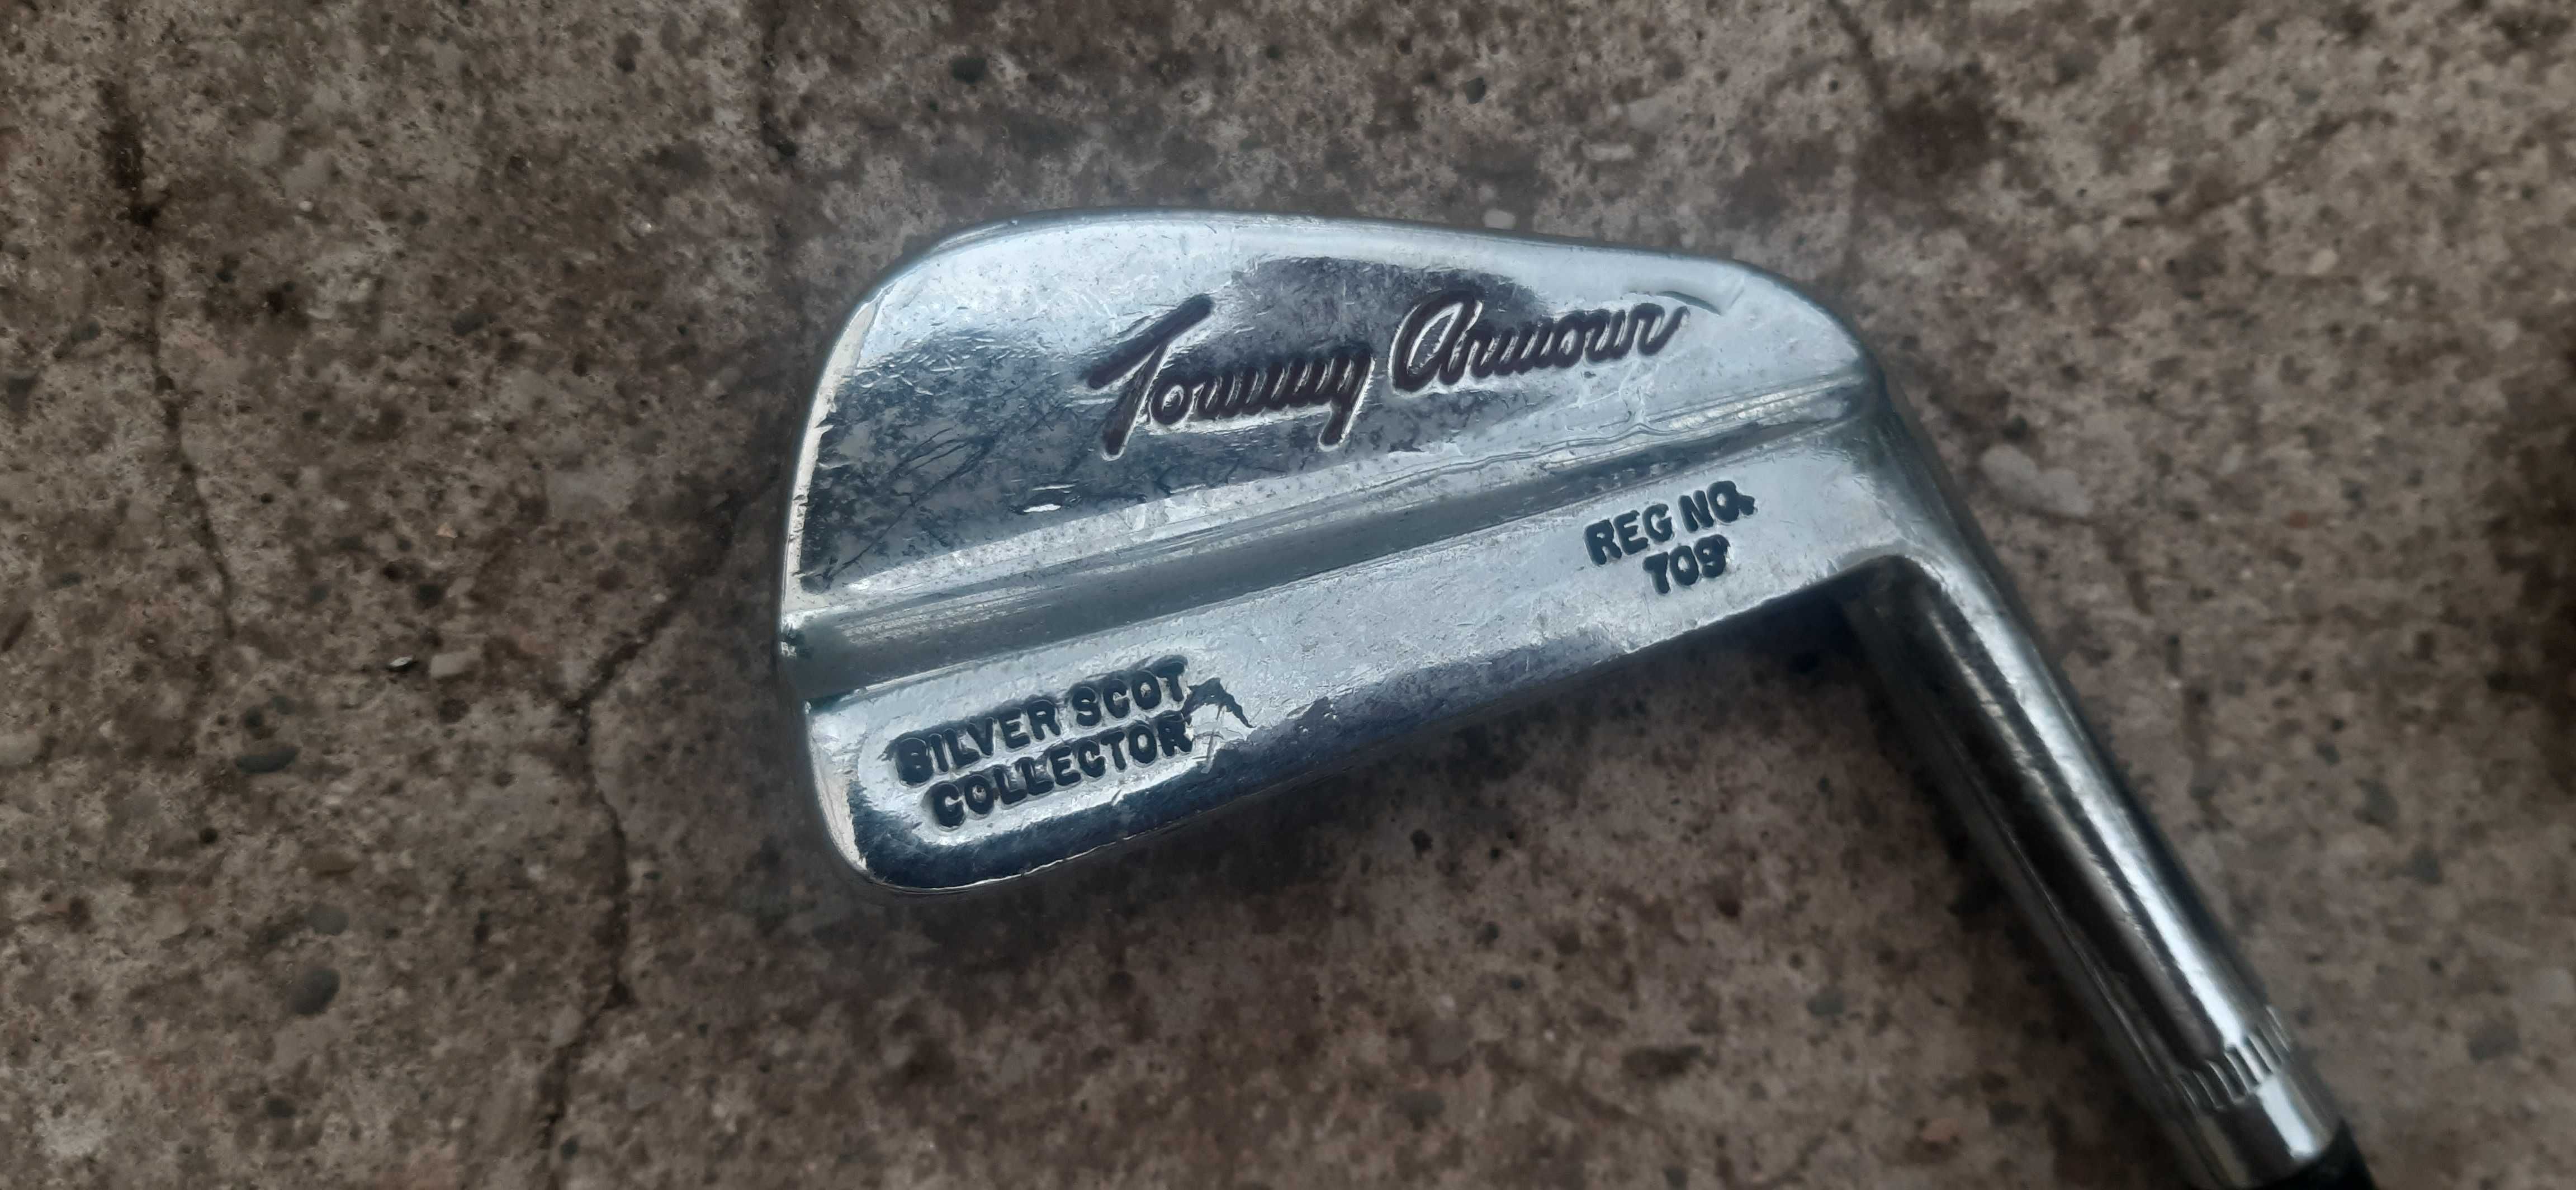 crose de golf Tommy Armour Silver Scot Collector